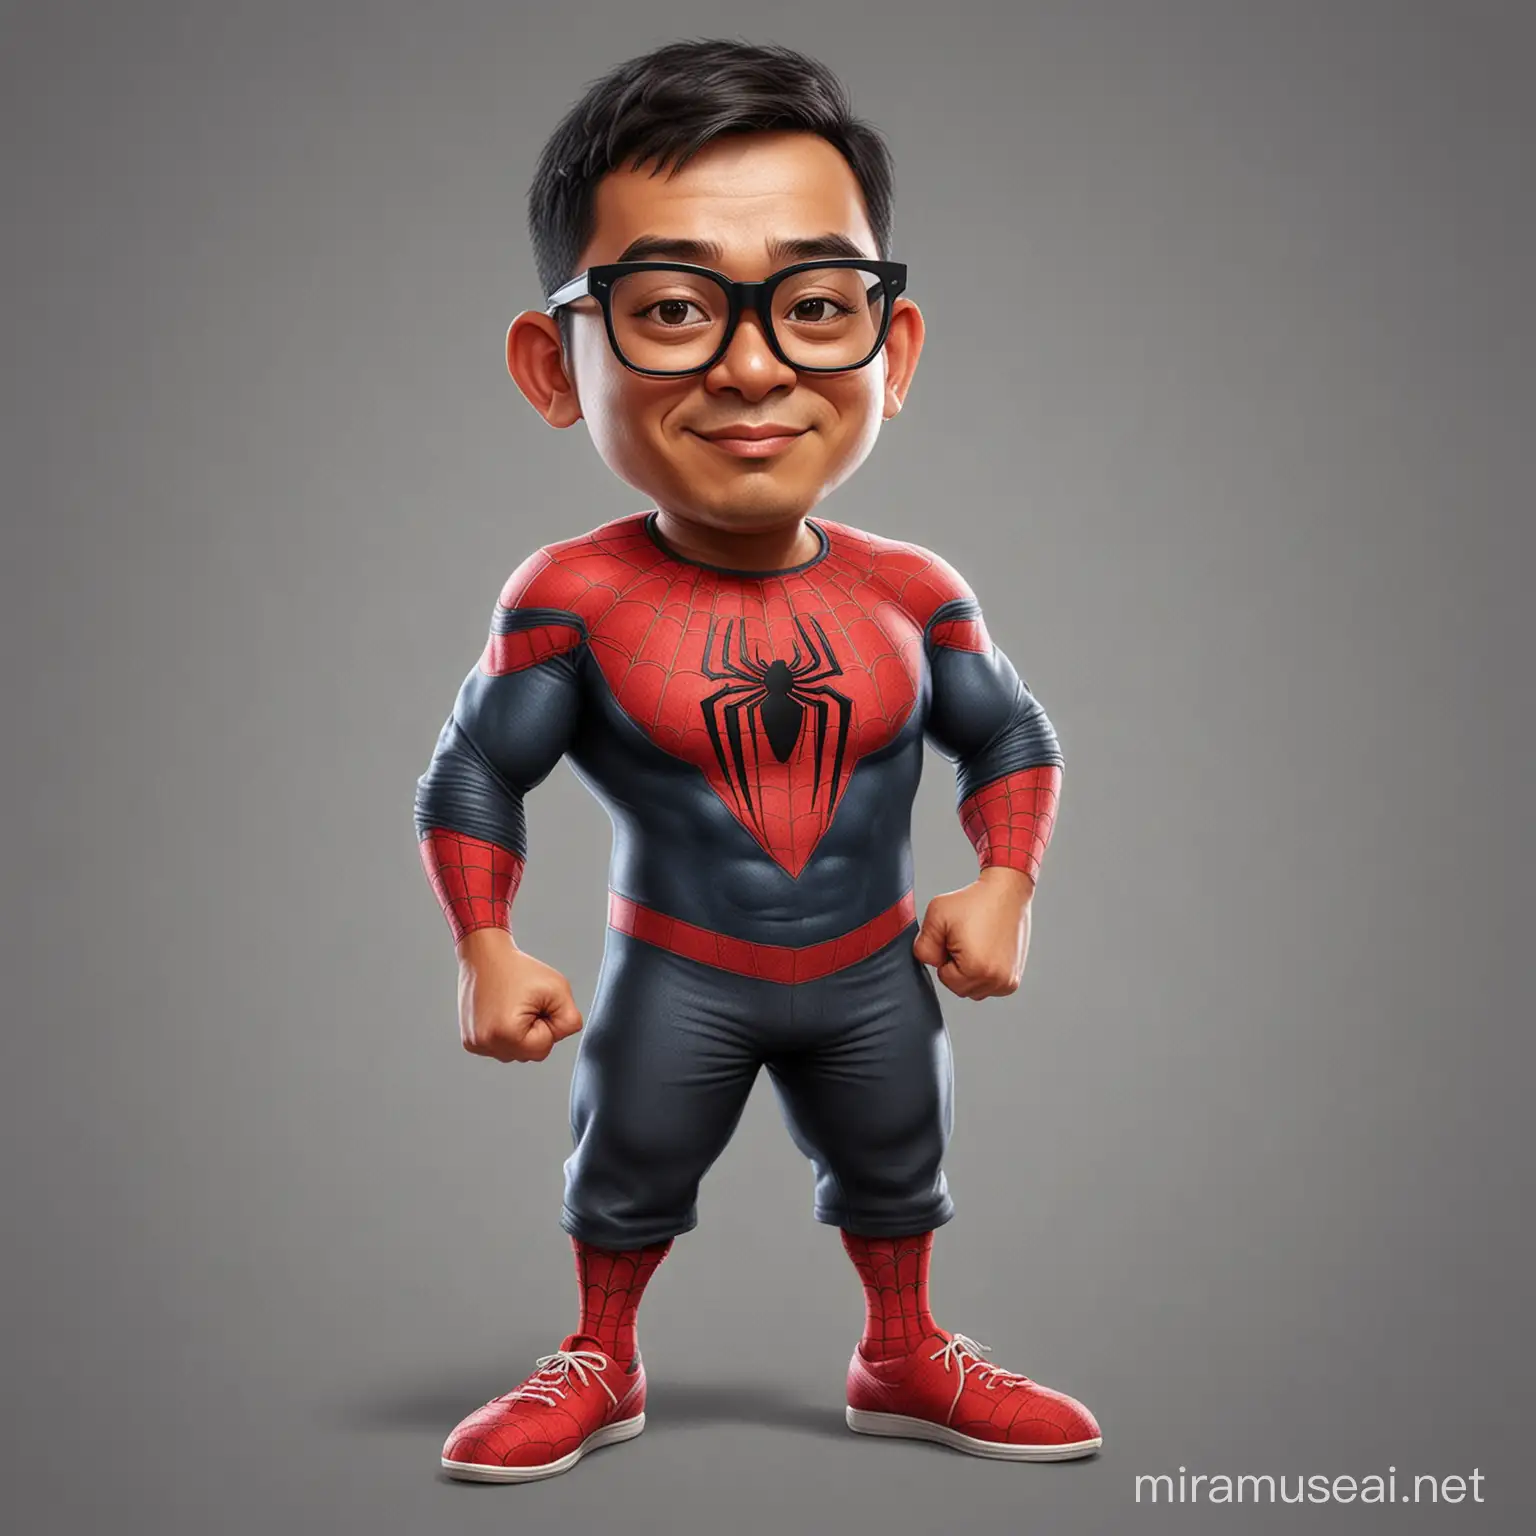 Indonesian Man in Realistic Spiderman Costume Portrait